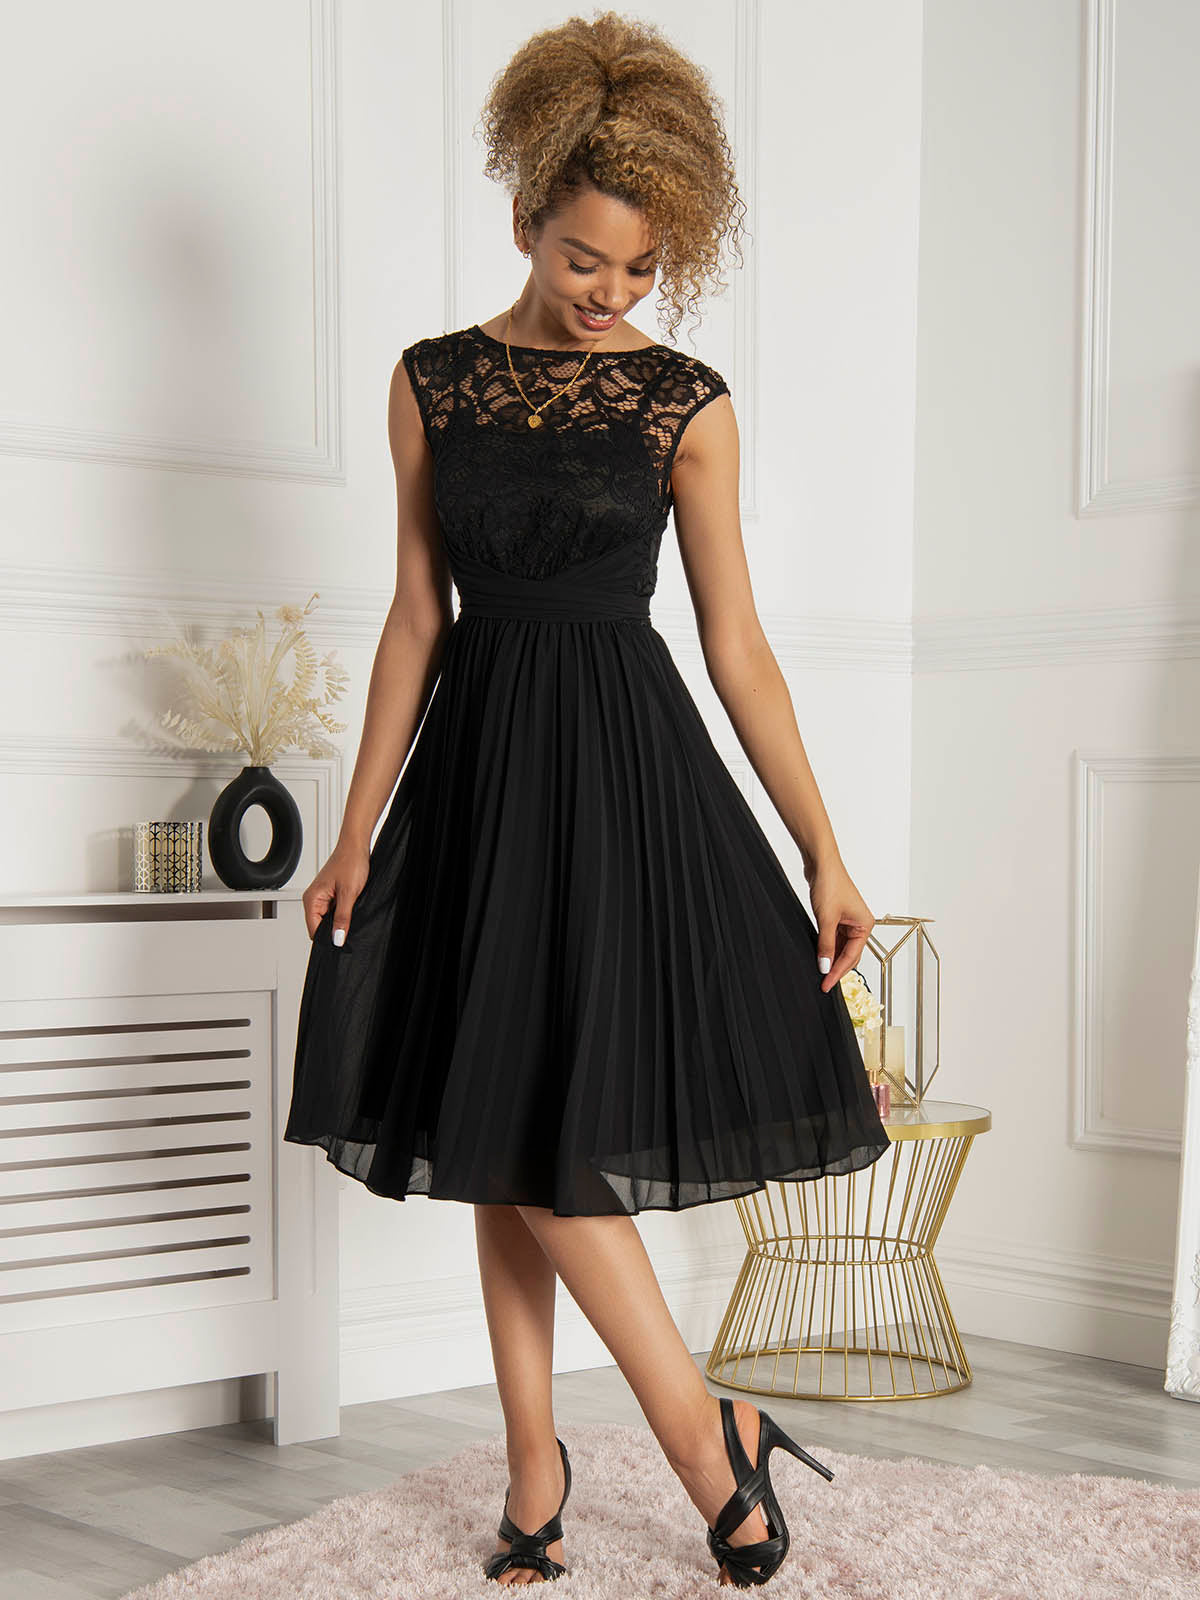 Brynn Whitfield's Black Satin Lace Puff Sleeve Dress